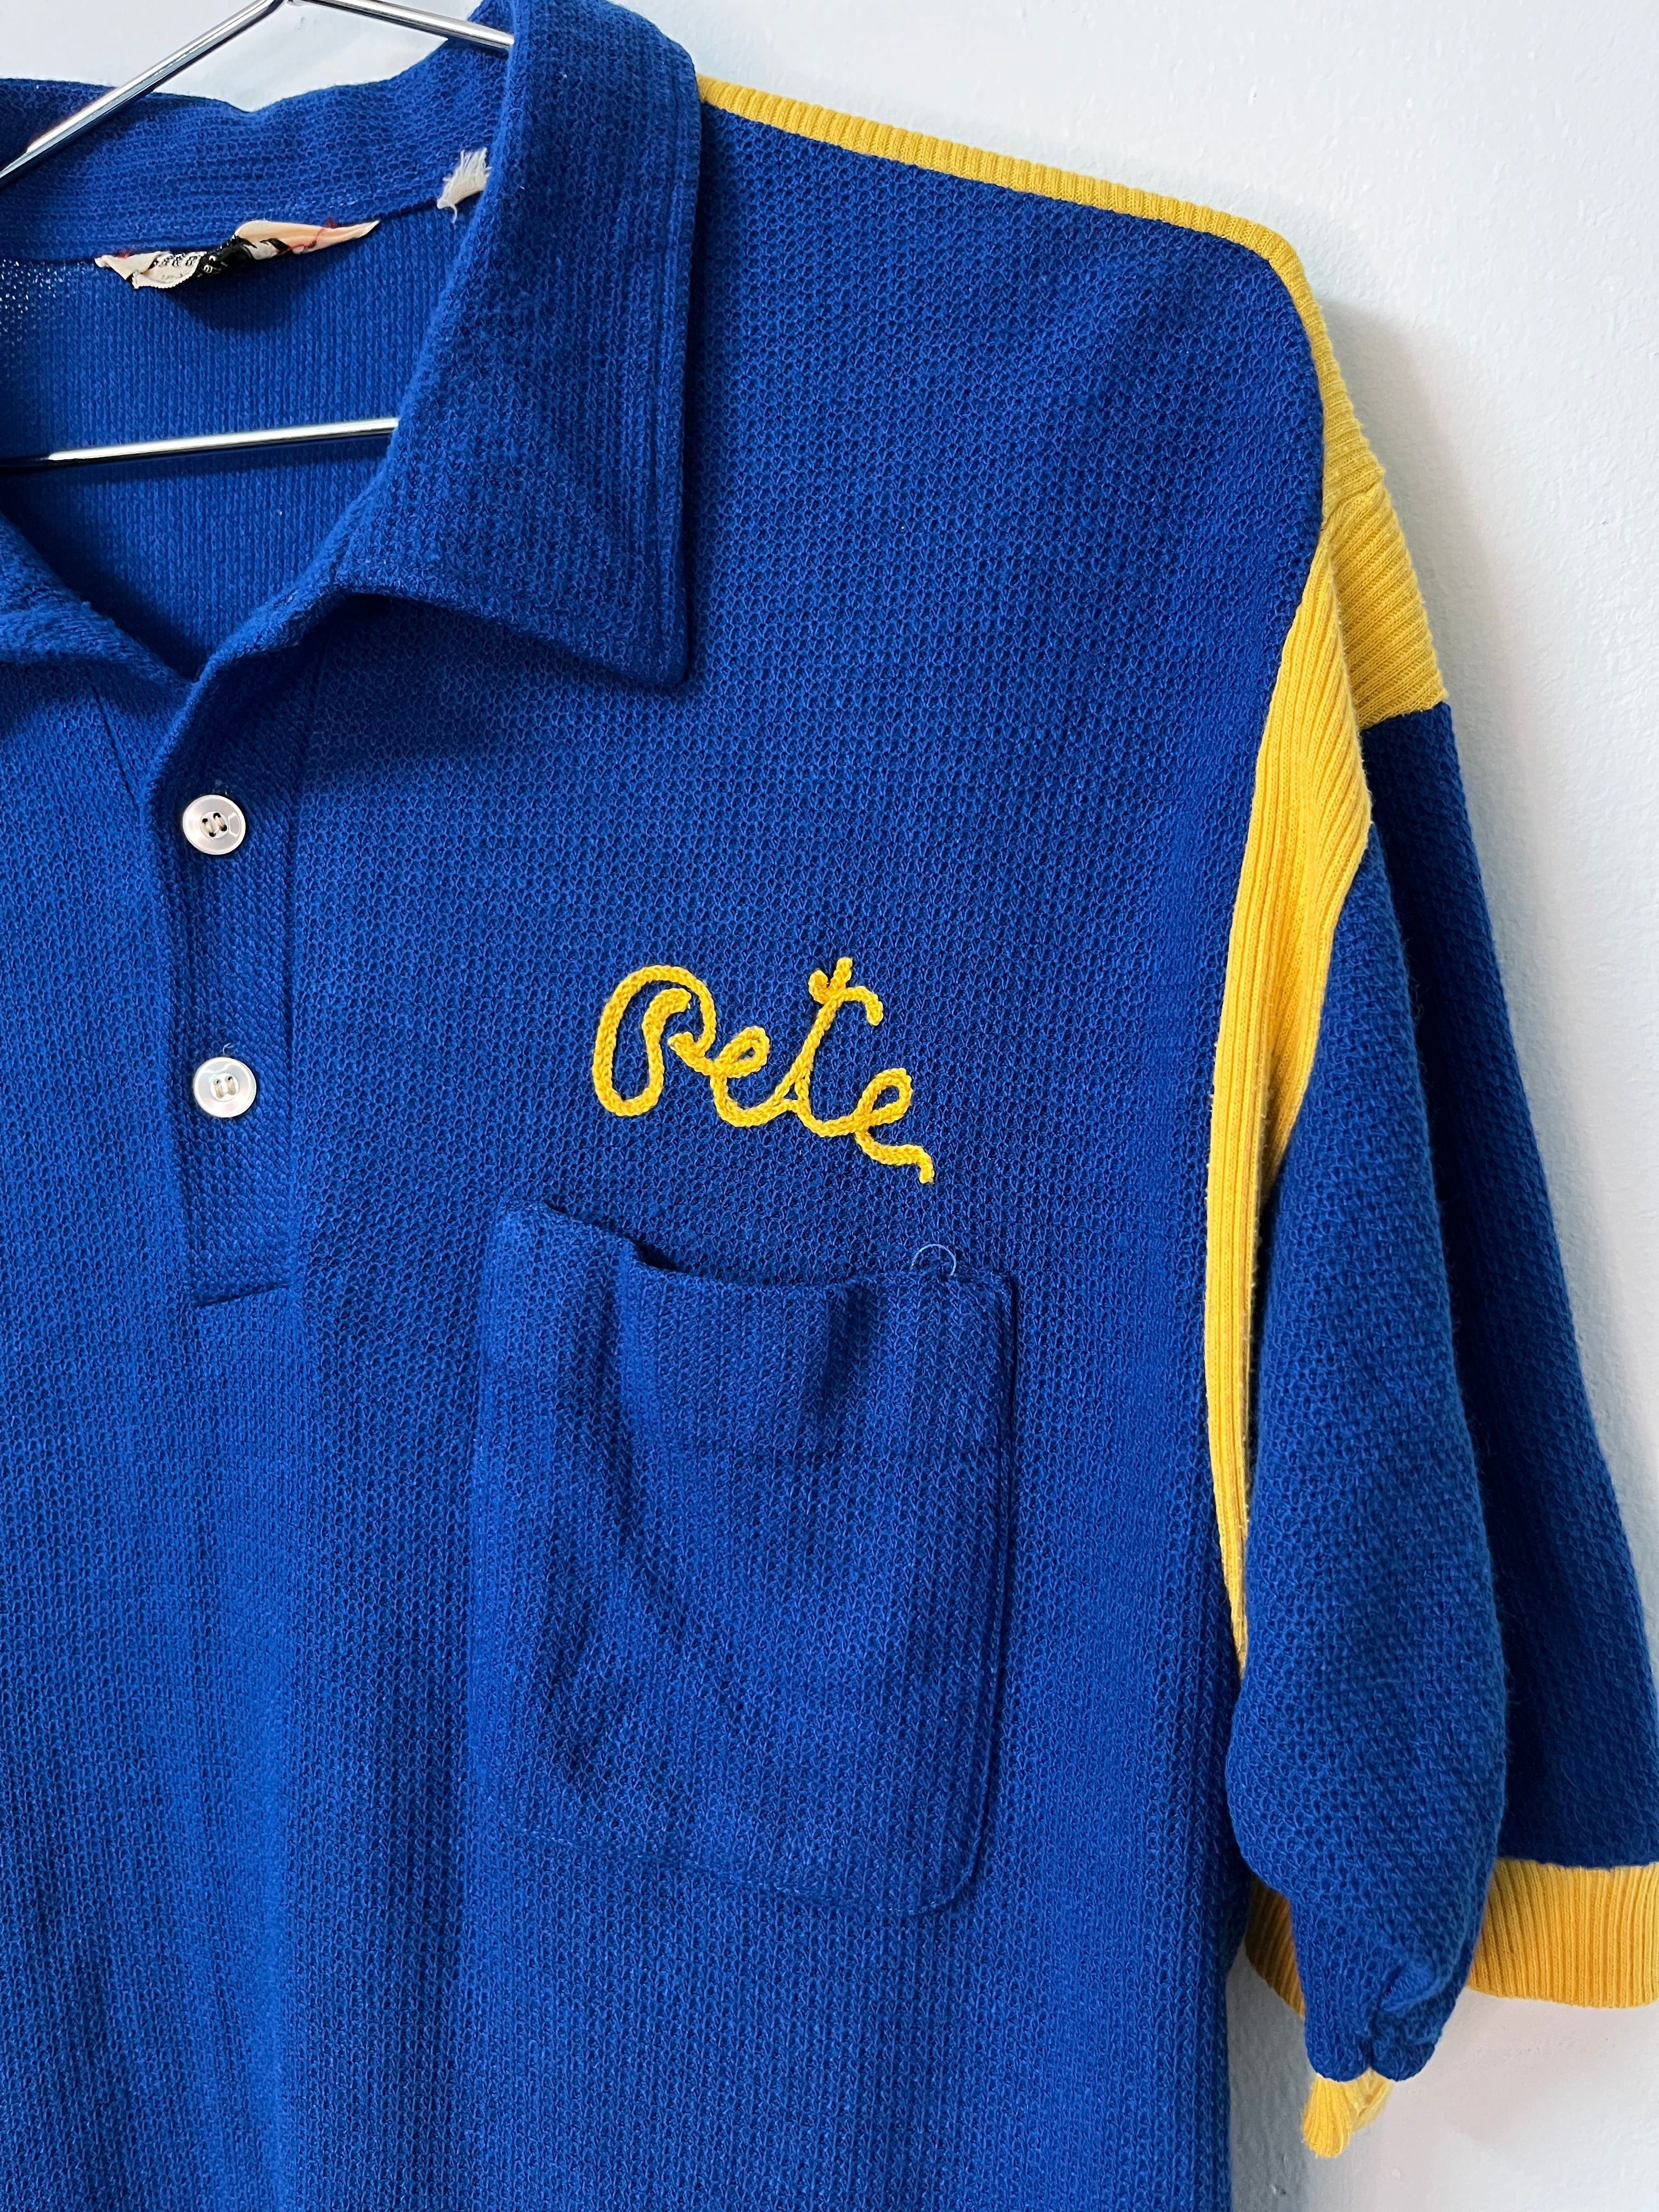 1970s Bowling Polo Shirt ‘Noon’s, Bennington VT’ - Blue/Yellow - XL